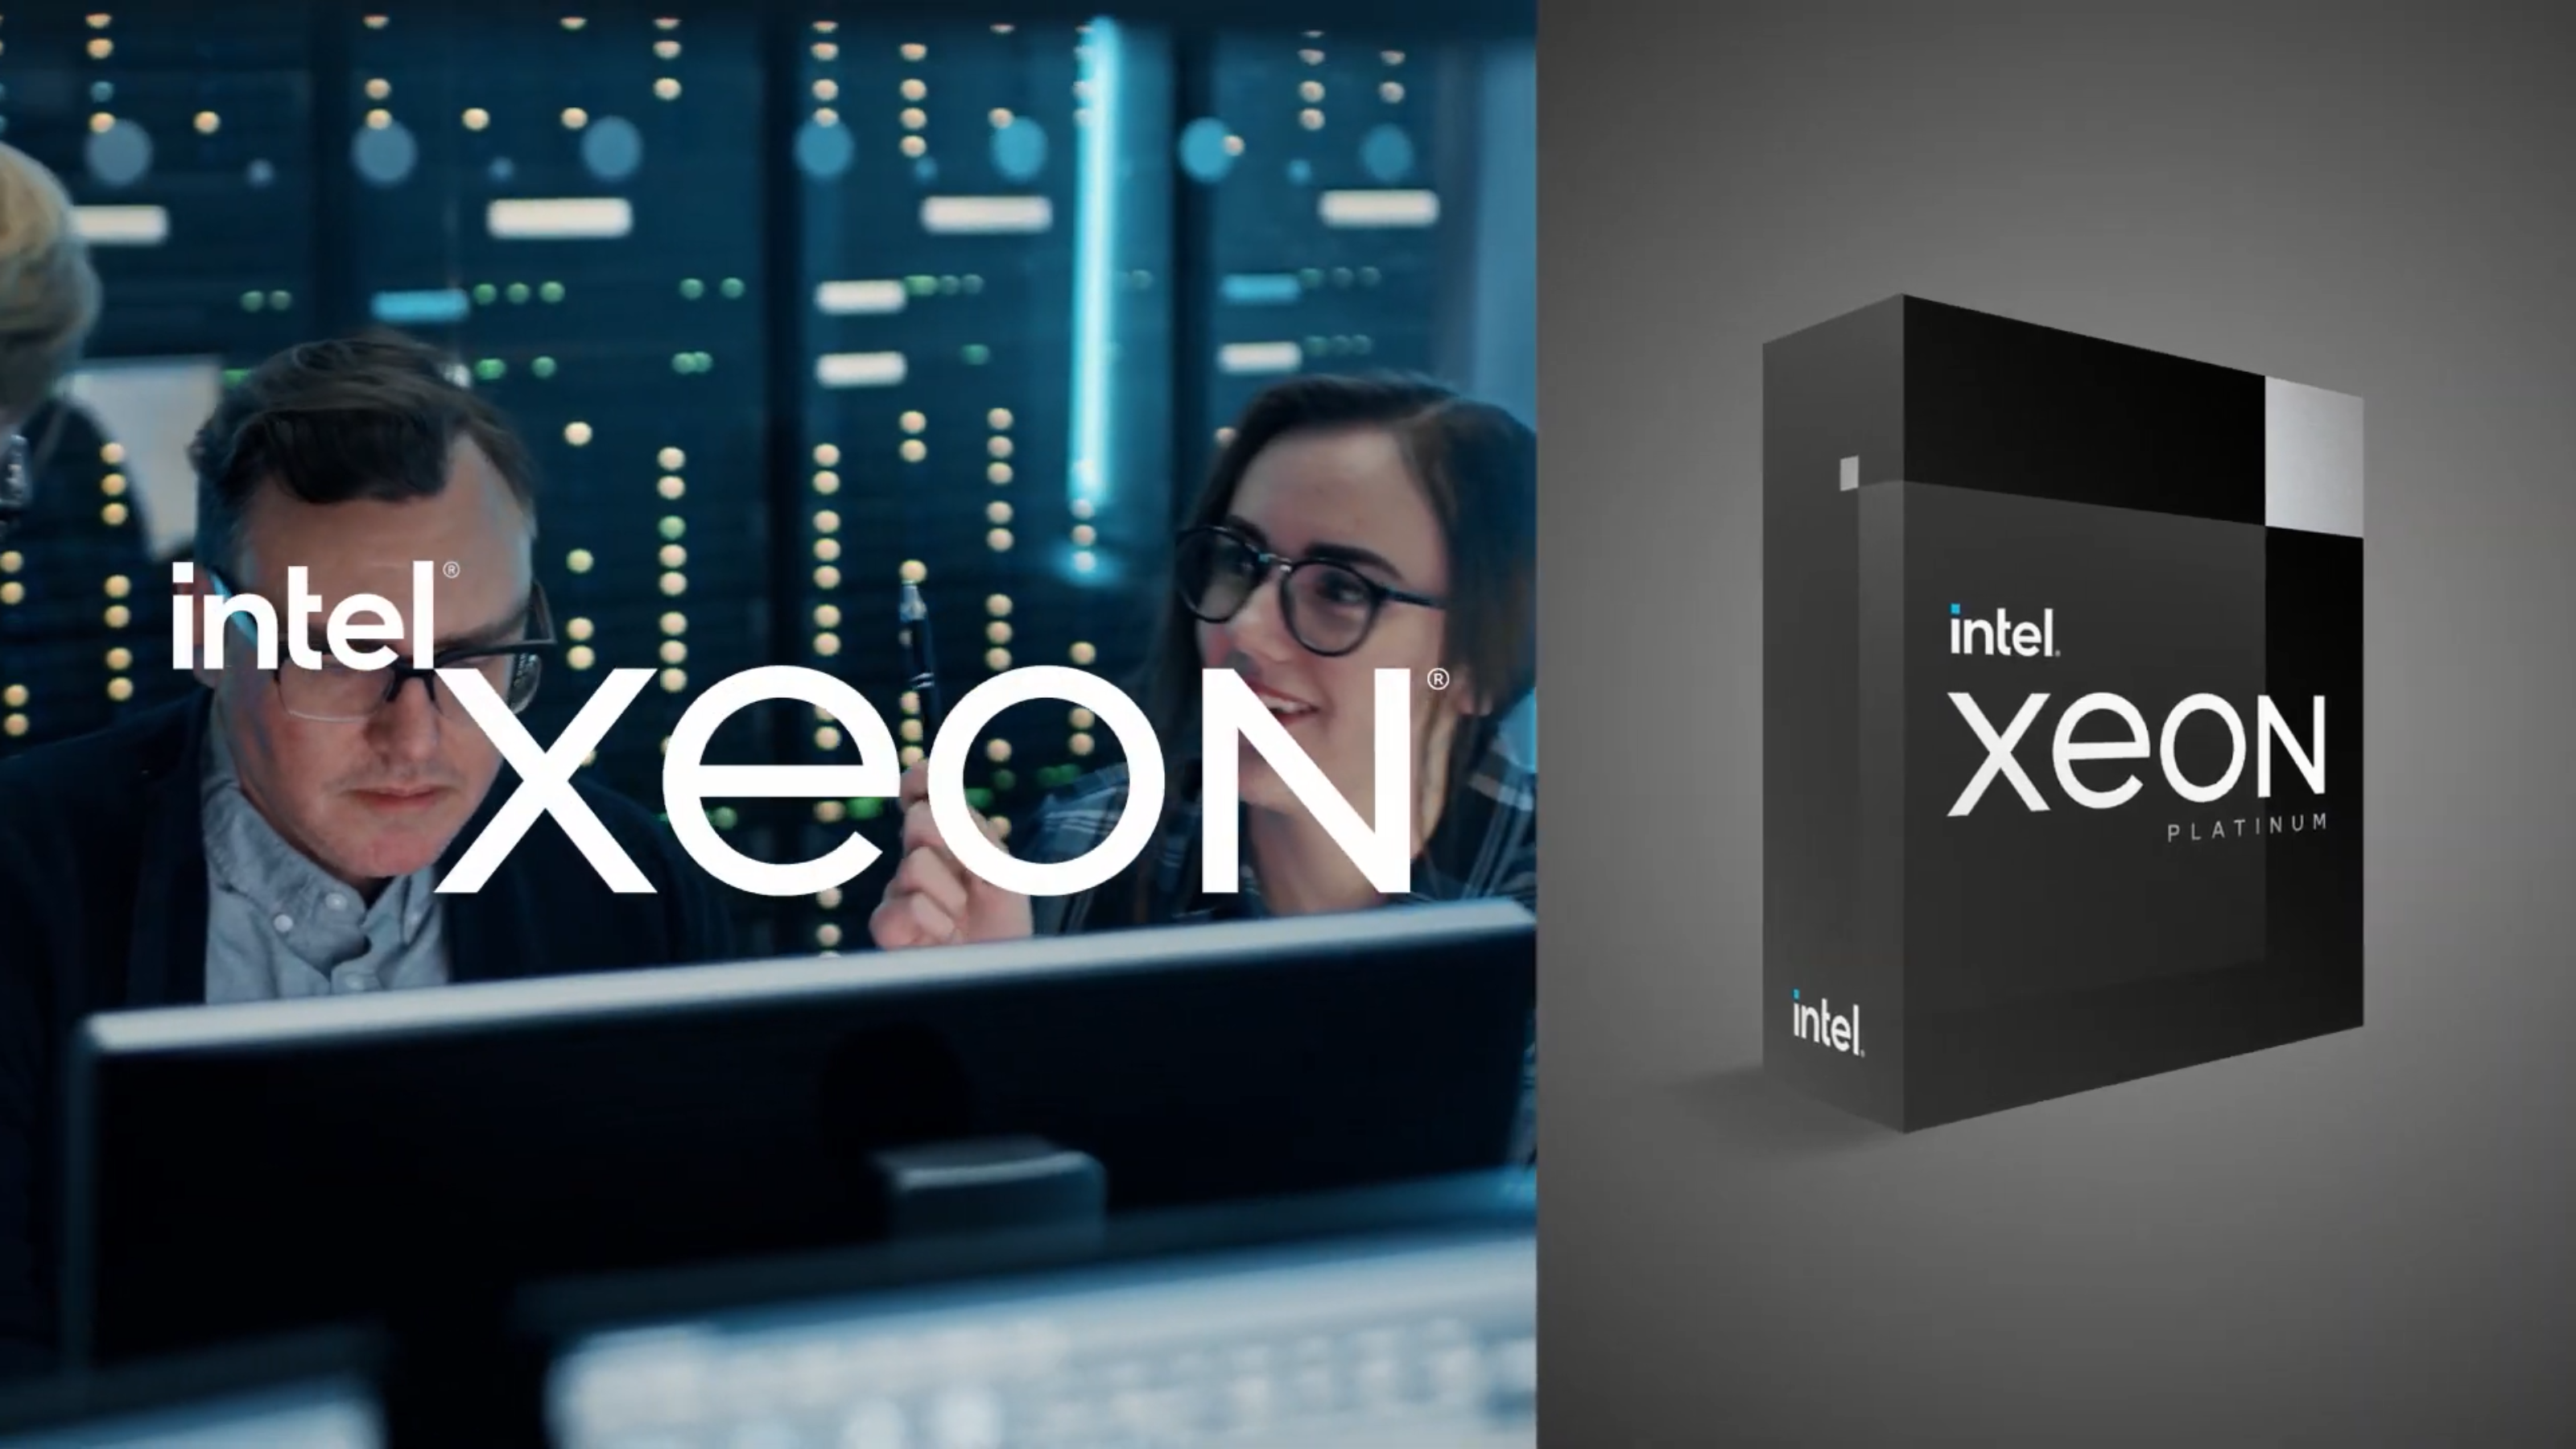 alt="Intel Xeon"